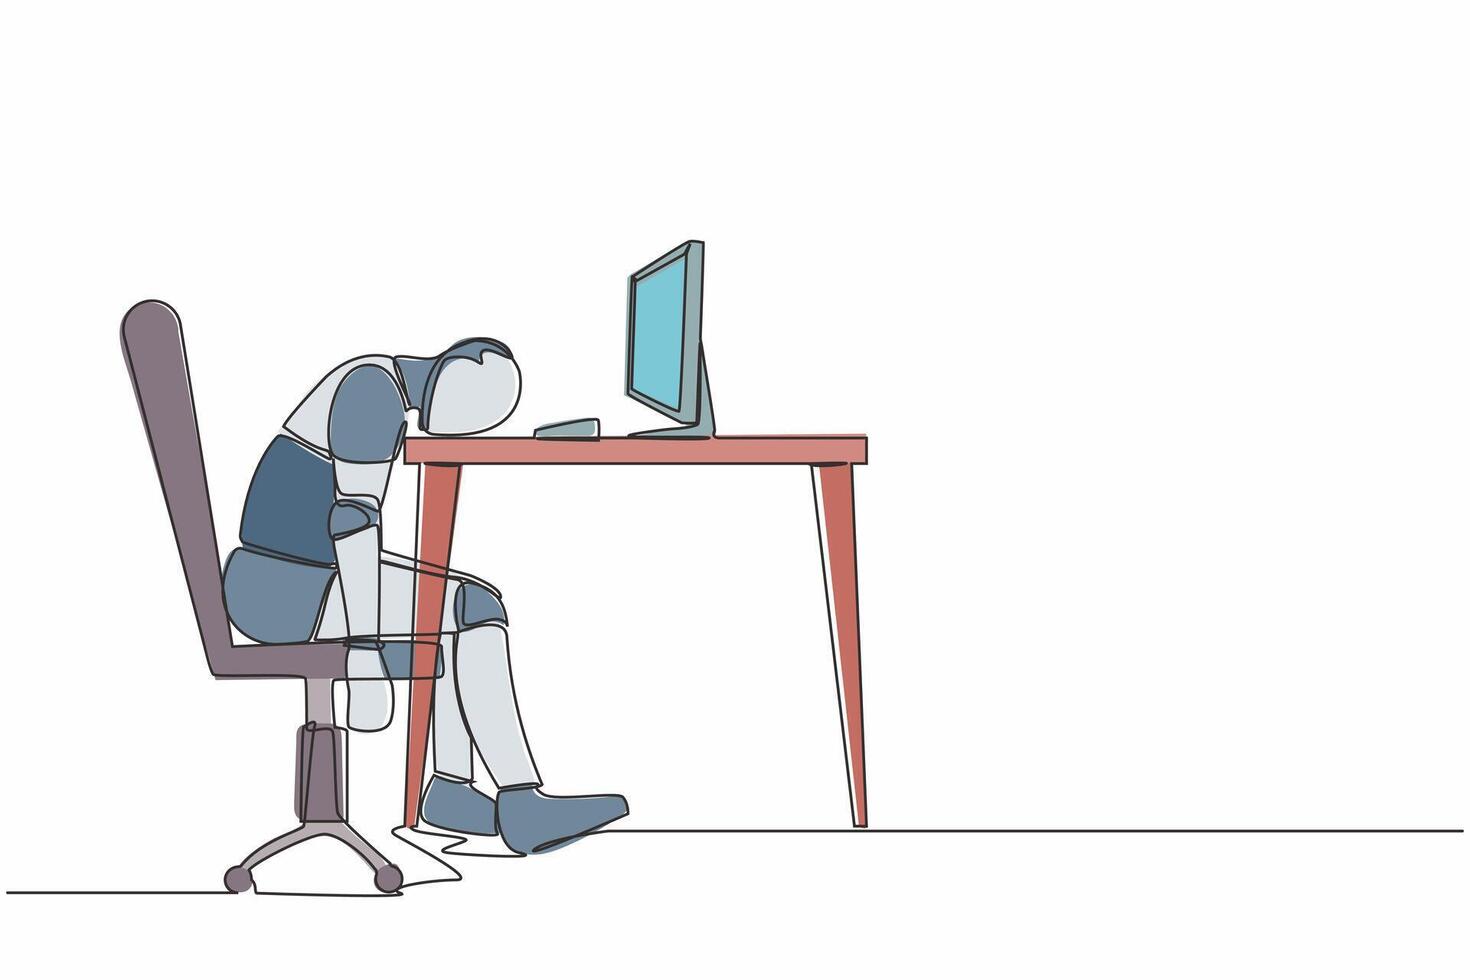 soltero uno línea dibujo agotado enfermo cansado robot triste aburrido sentado con cabeza abajo en escritorio. robótico artificial inteligencia. tecnología industria. continuo línea diseño gráfico vector ilustración